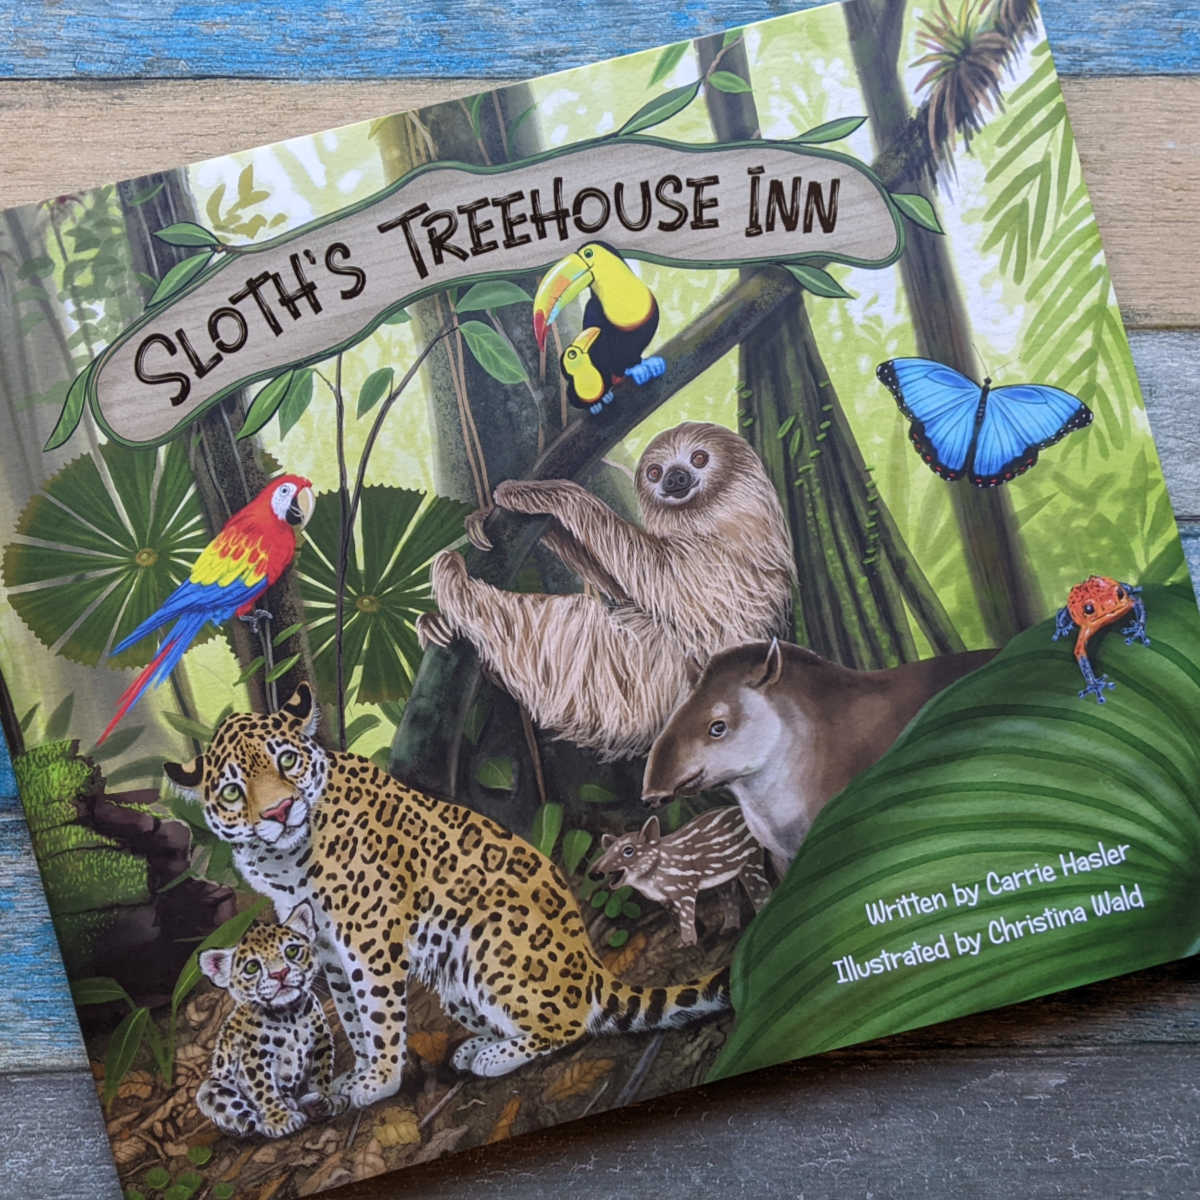 book sloths treehouse inn